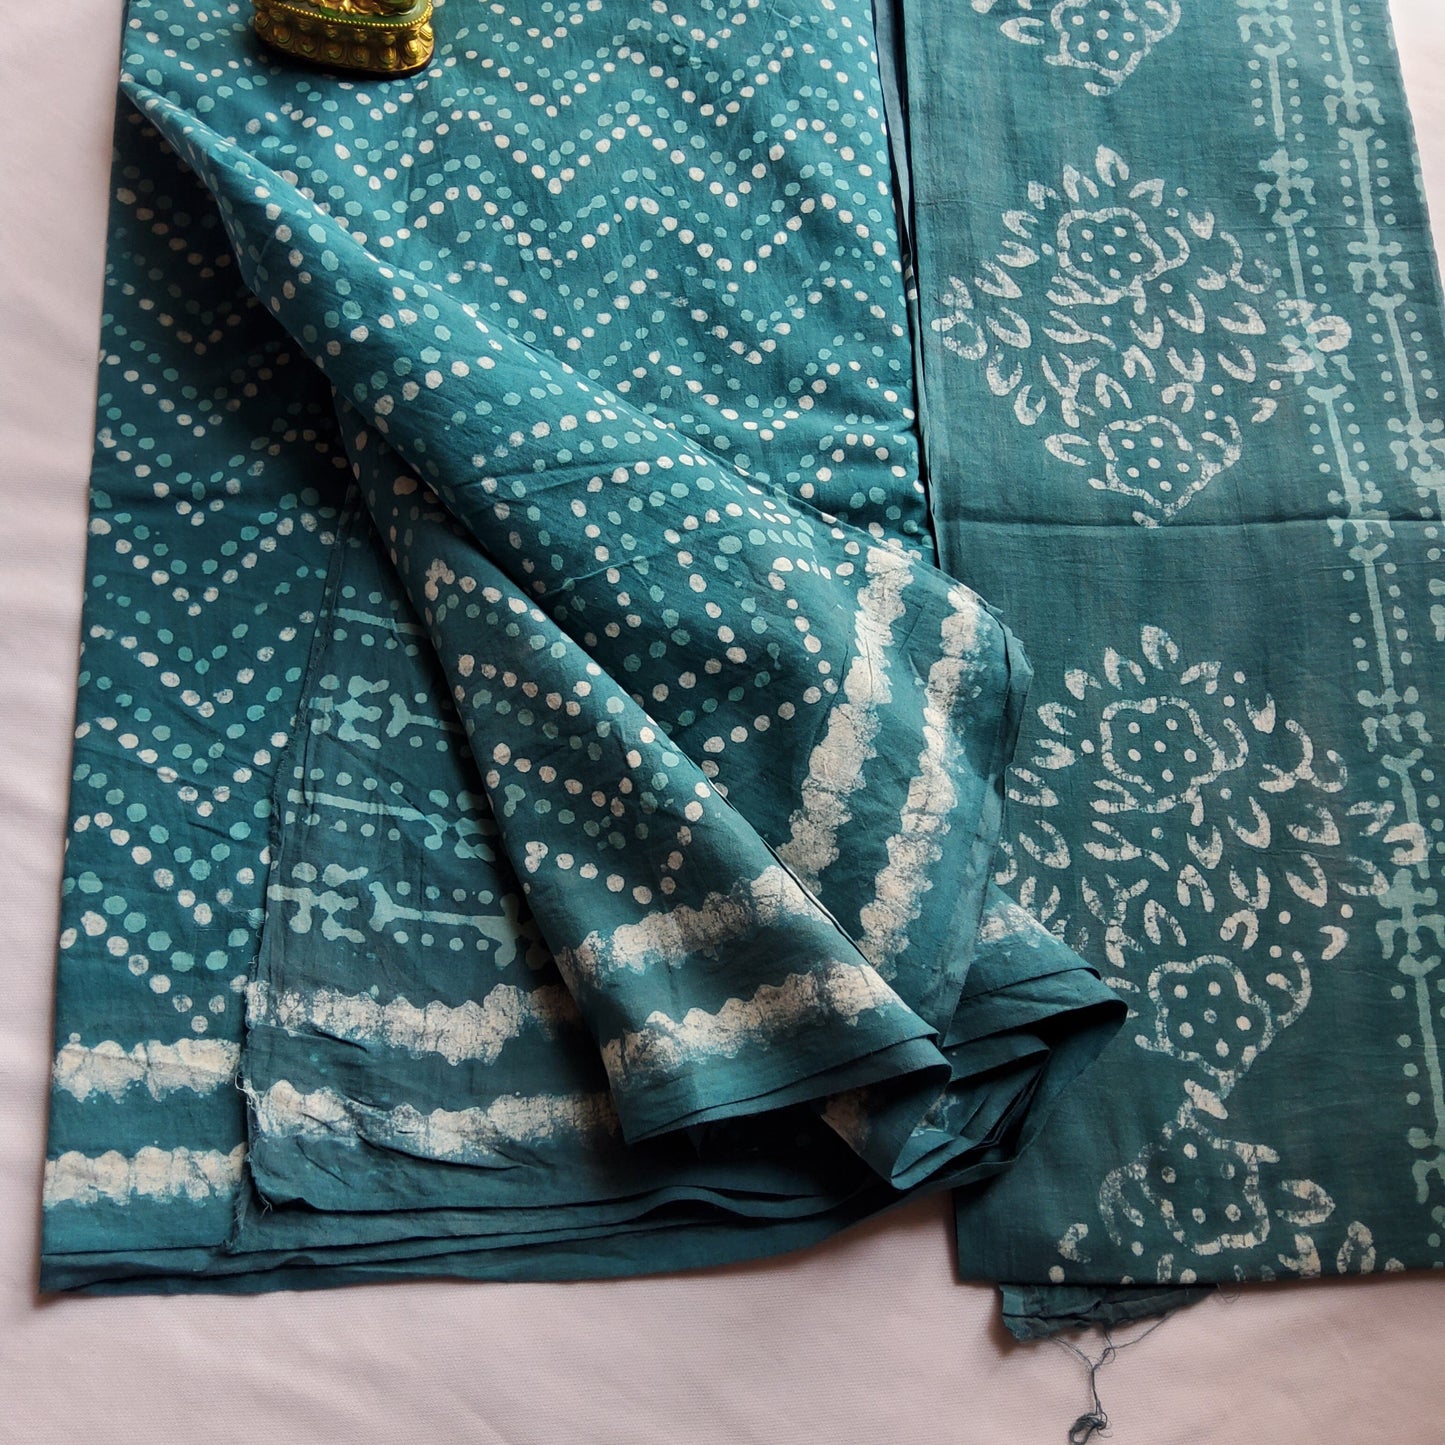 Cotton Hand Block Print Dress Material with Cotton Dupatta